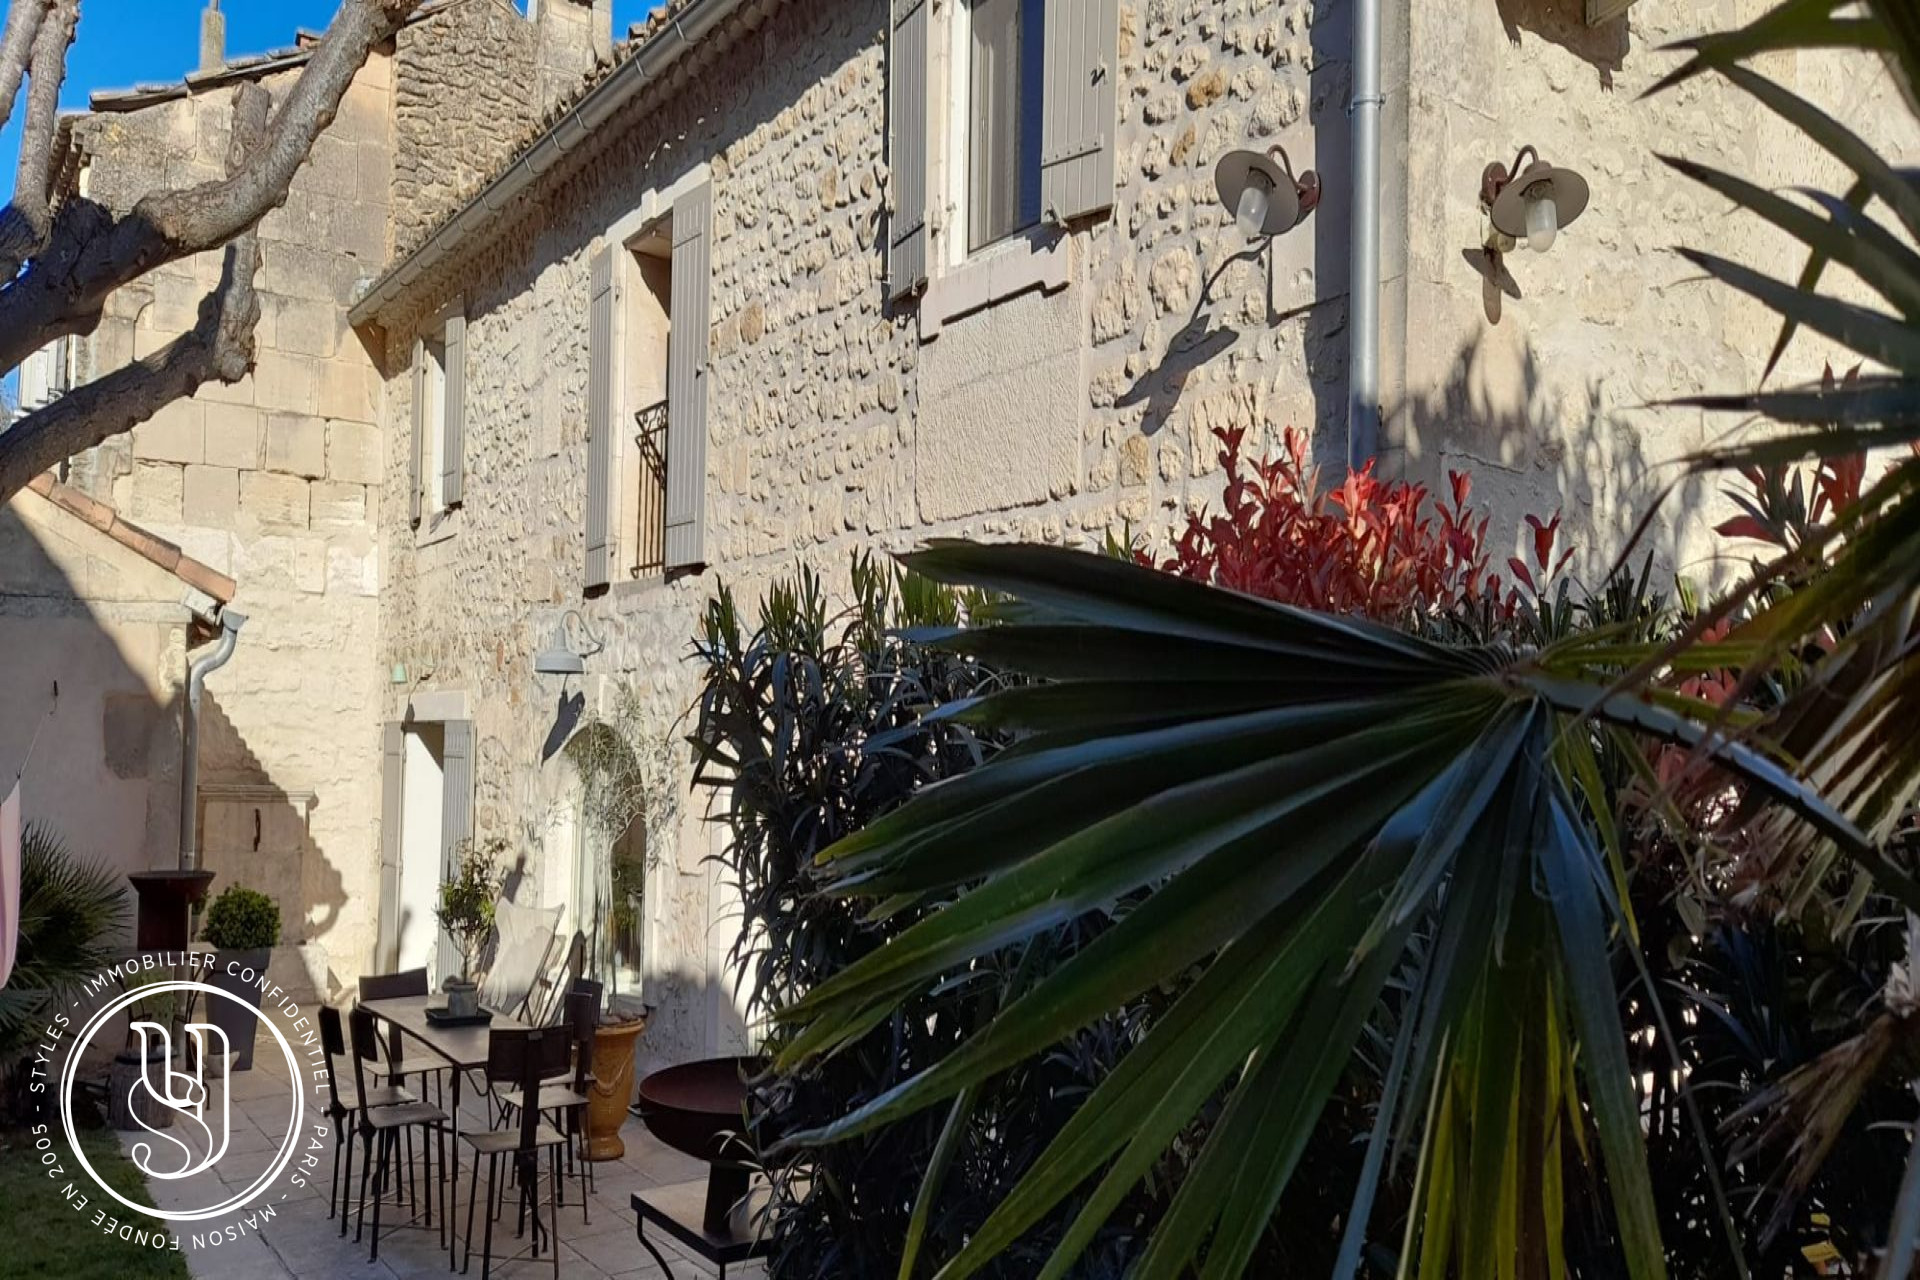 Saint-Rémy-de-Provence - near, a village house with character - image 9